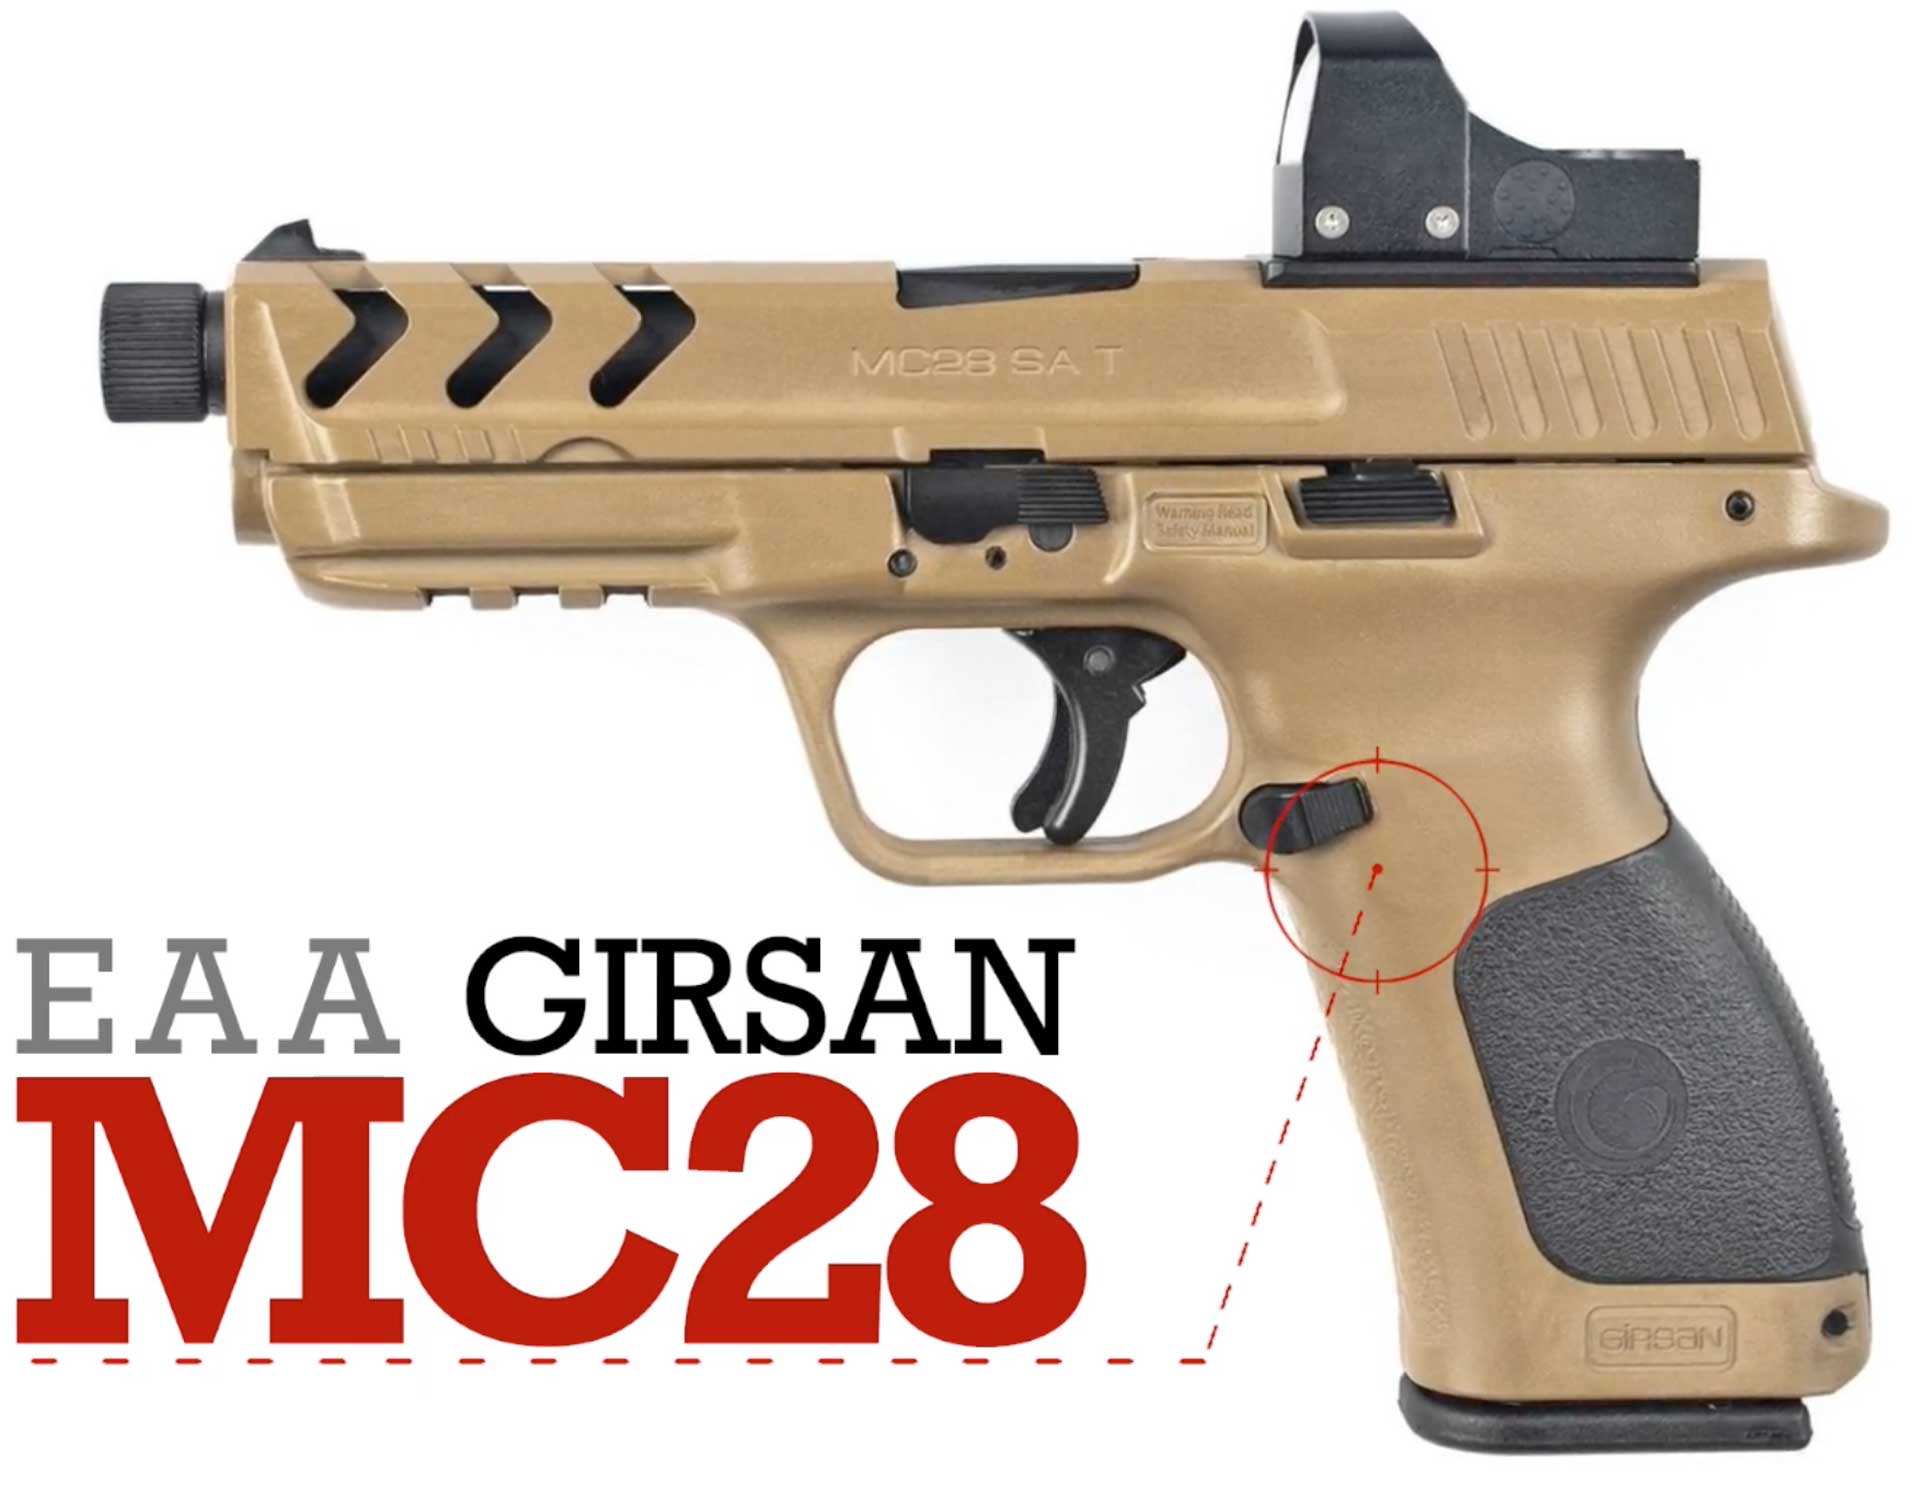 left side brown handgun pistol gun text on image noting make and model "EAA GIRSAN MC28"